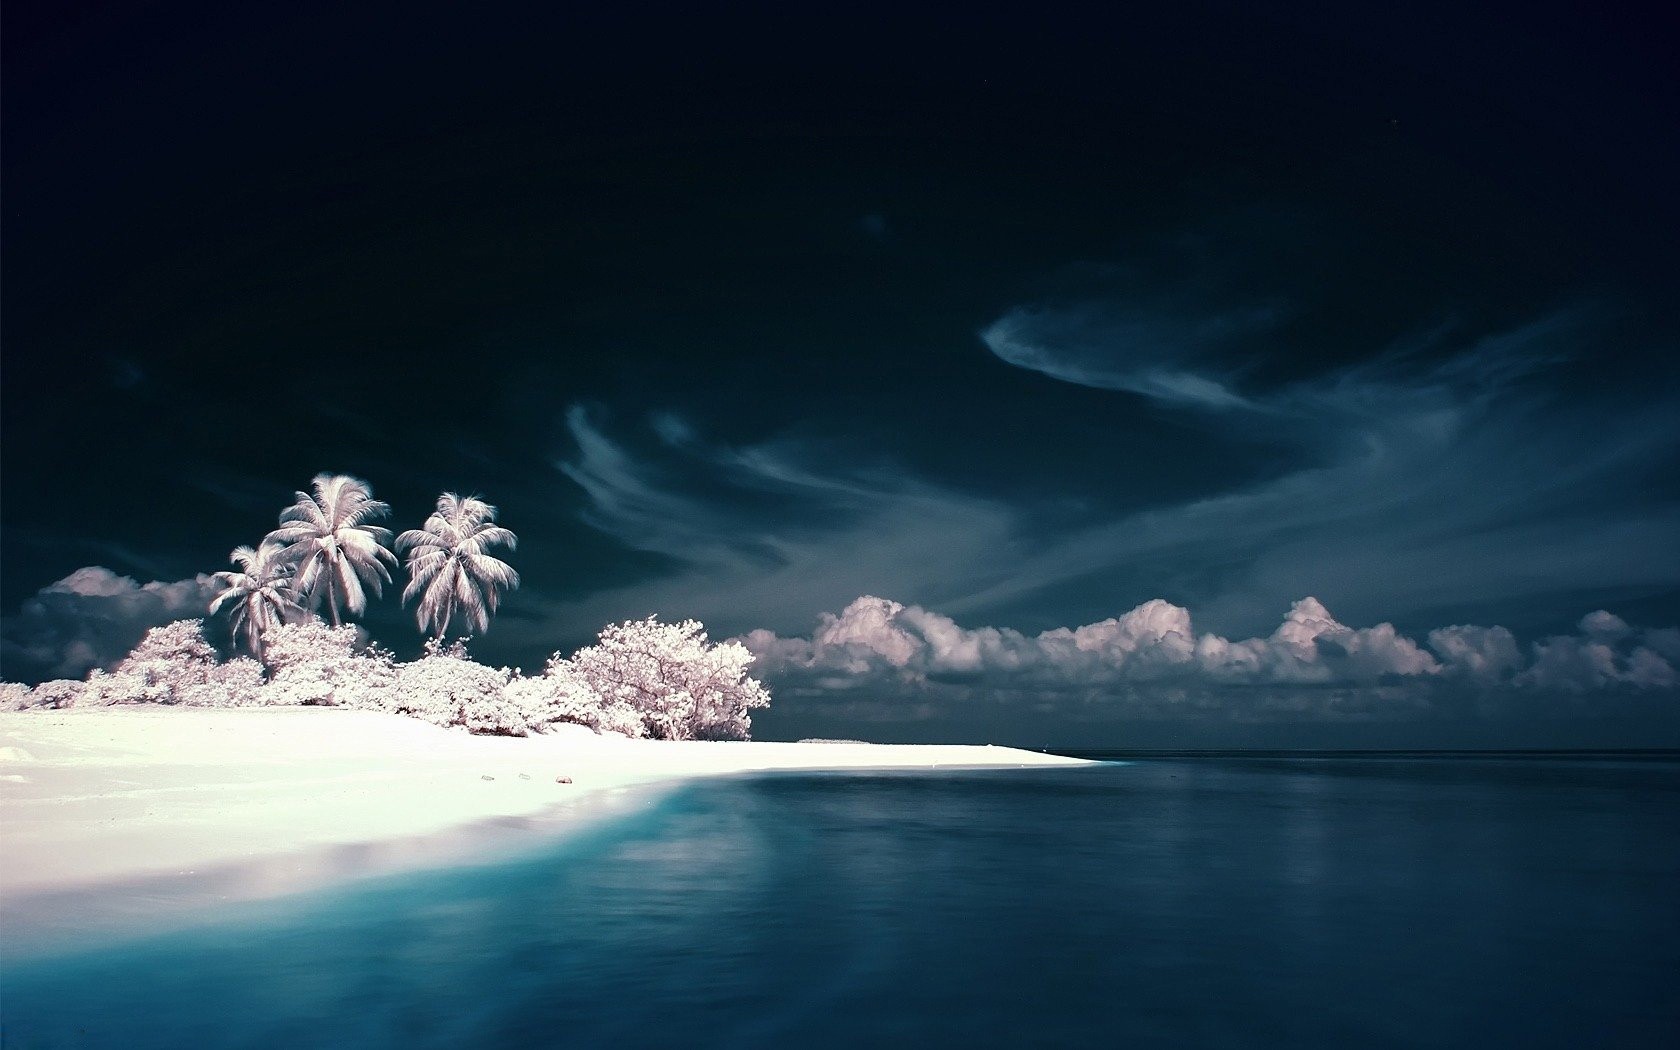 General 1680x1050 CGI photo manipulation landscape beach nature digital art palm trees clouds island sea